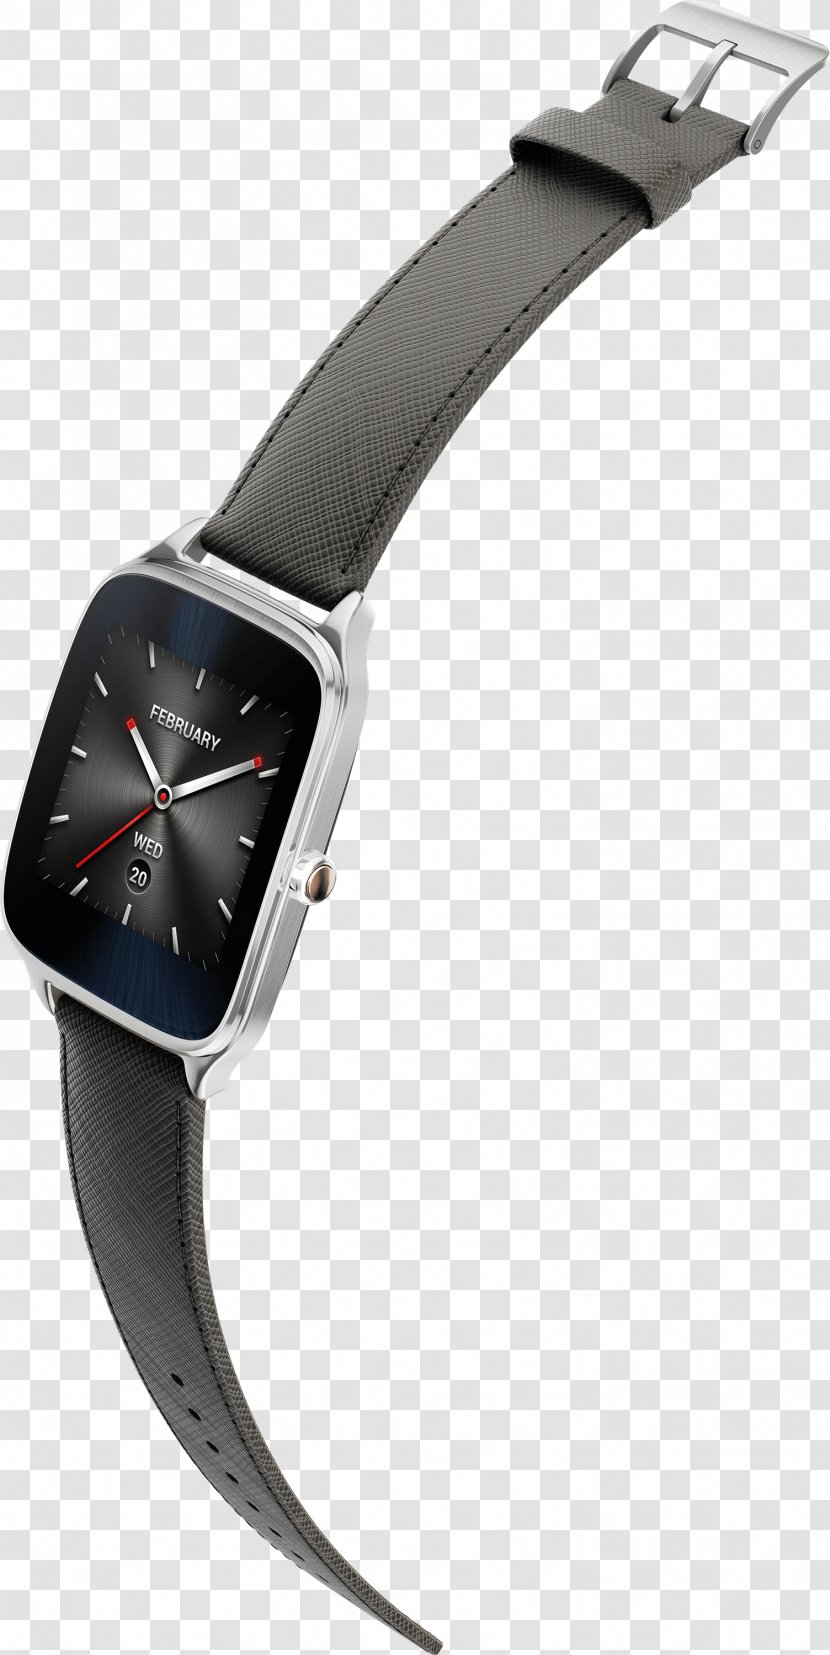 ASUS ZenWatch 2 LG G Watch Smartwatch - Wear Os Transparent PNG